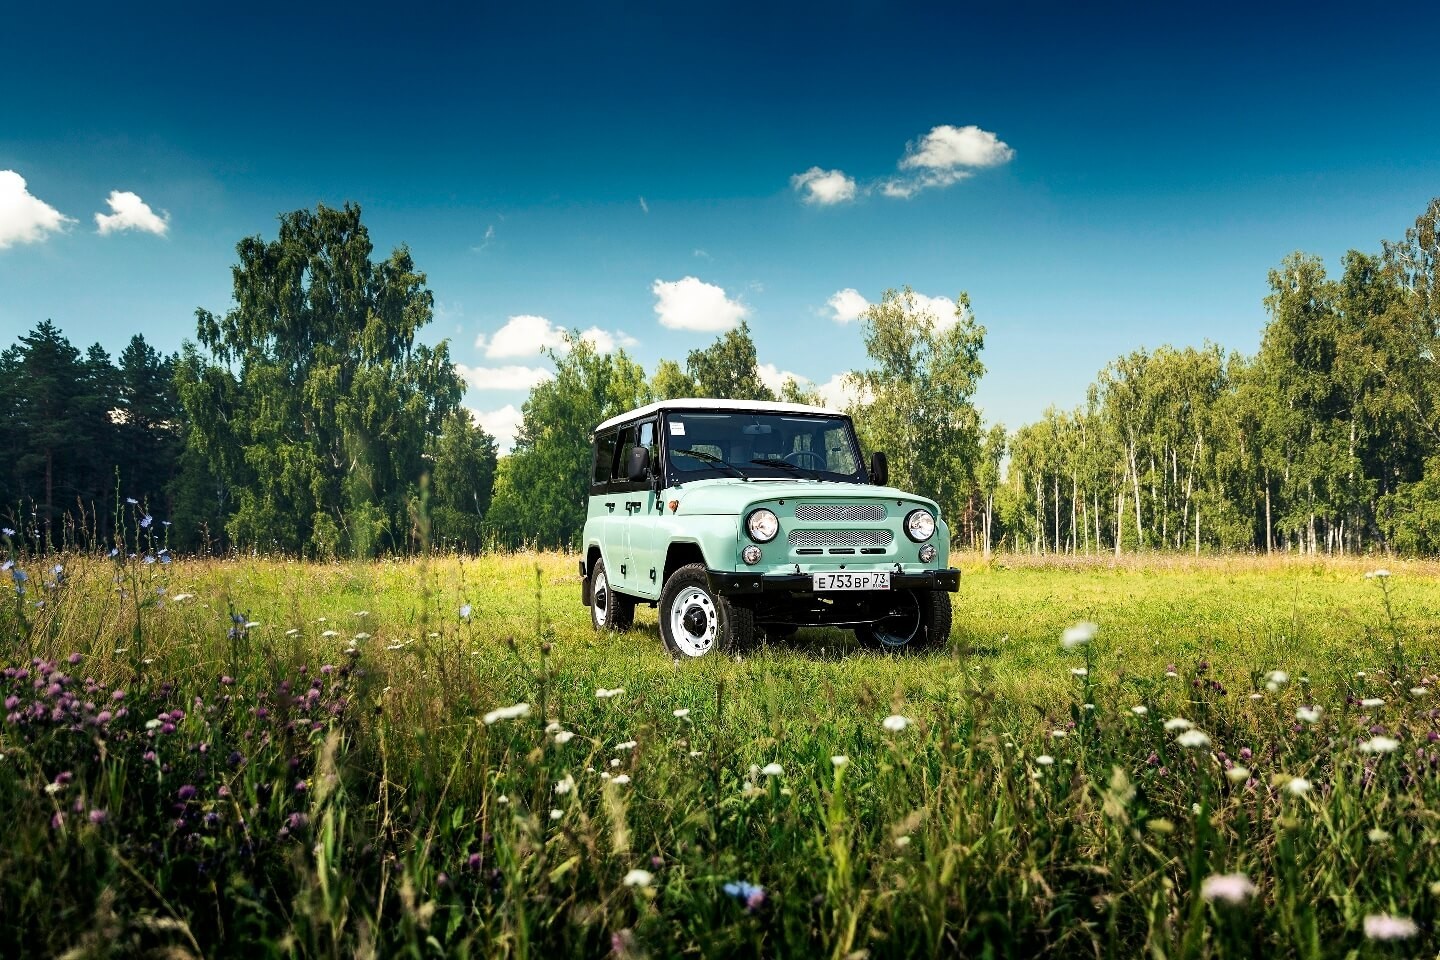 Јубиларна верзија возила УАЗ „Хантер“ направљена поводом 45. годишњице модела УАЗ-469. 